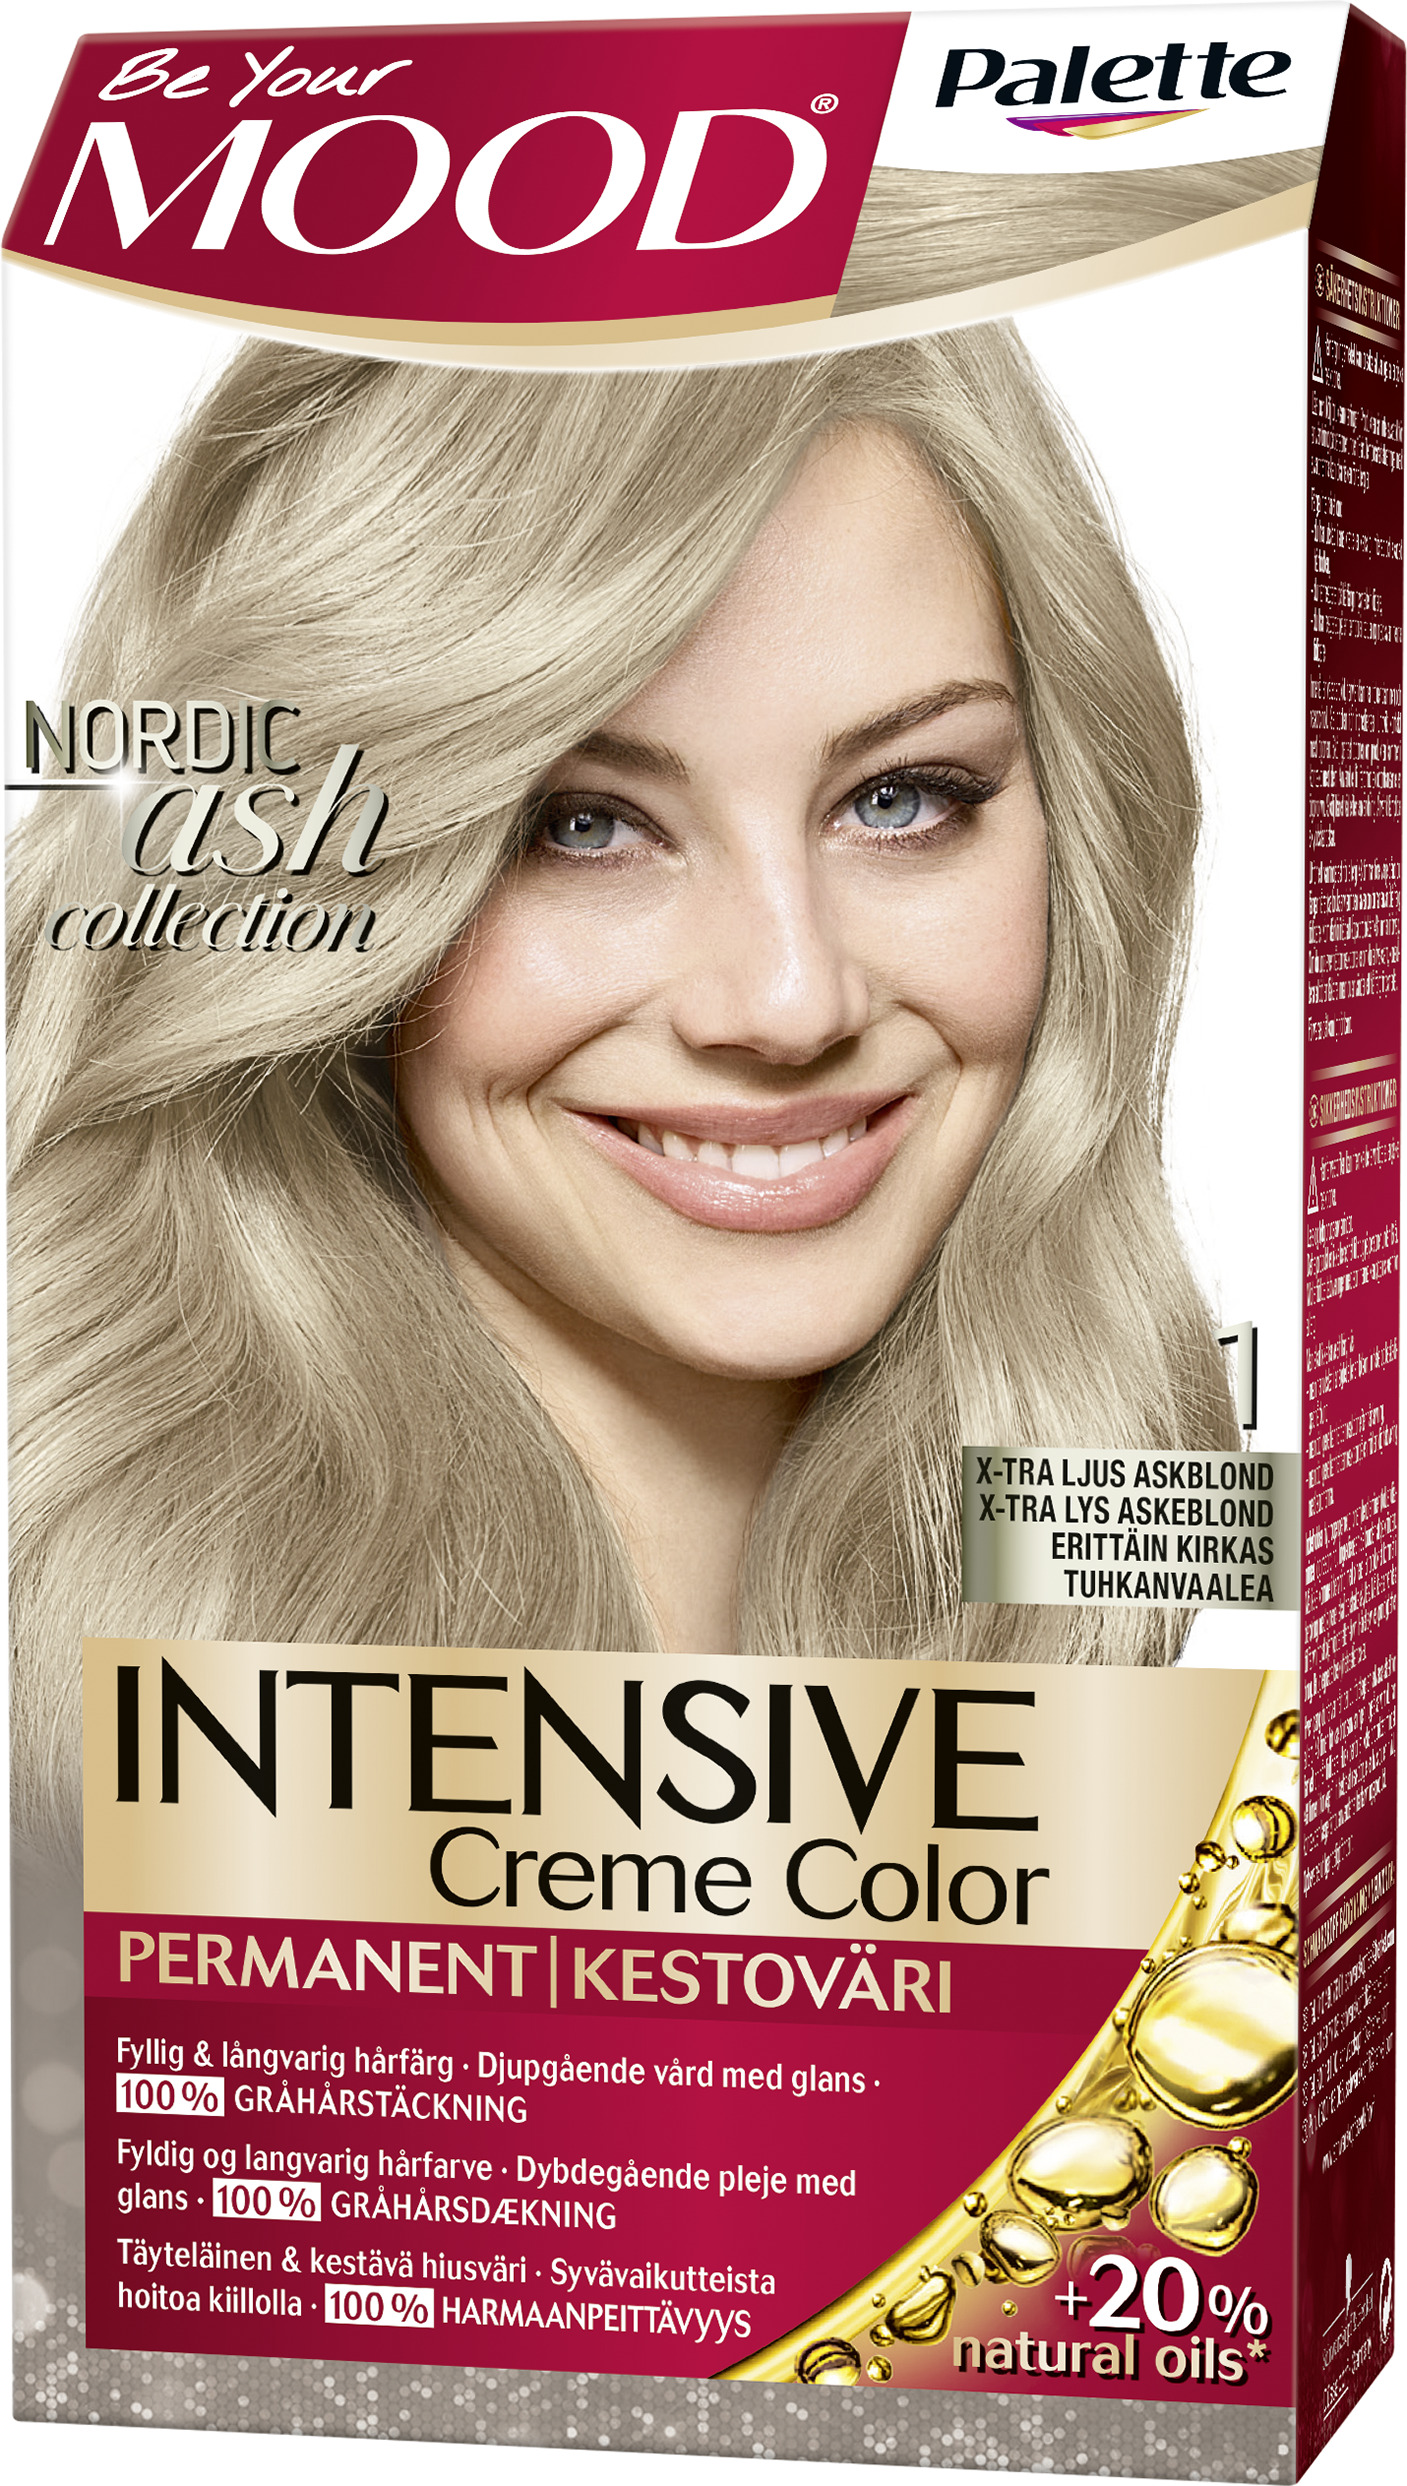 MOOD Palette Intensive Creme Color 1 X-tra Ljus Askblond